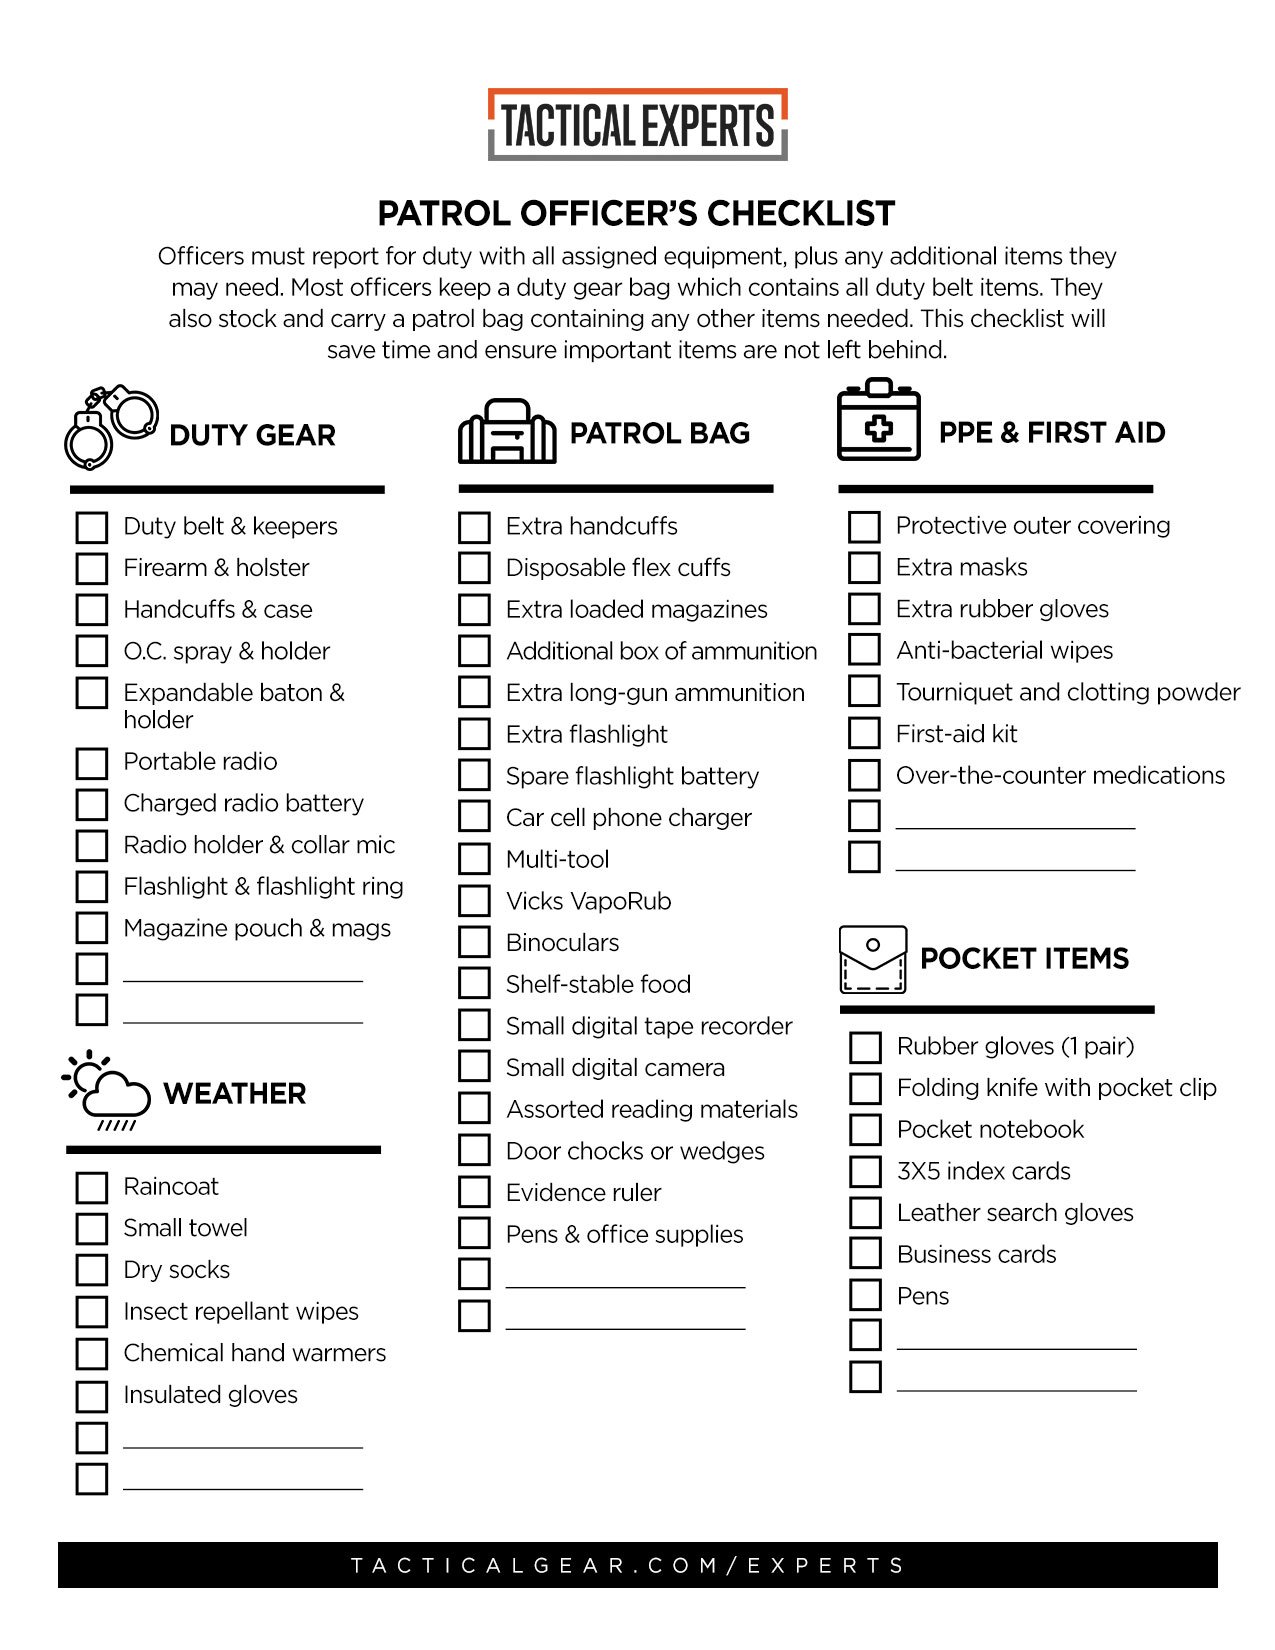 Tactical Gear Checklist for Women in Law Enforcement